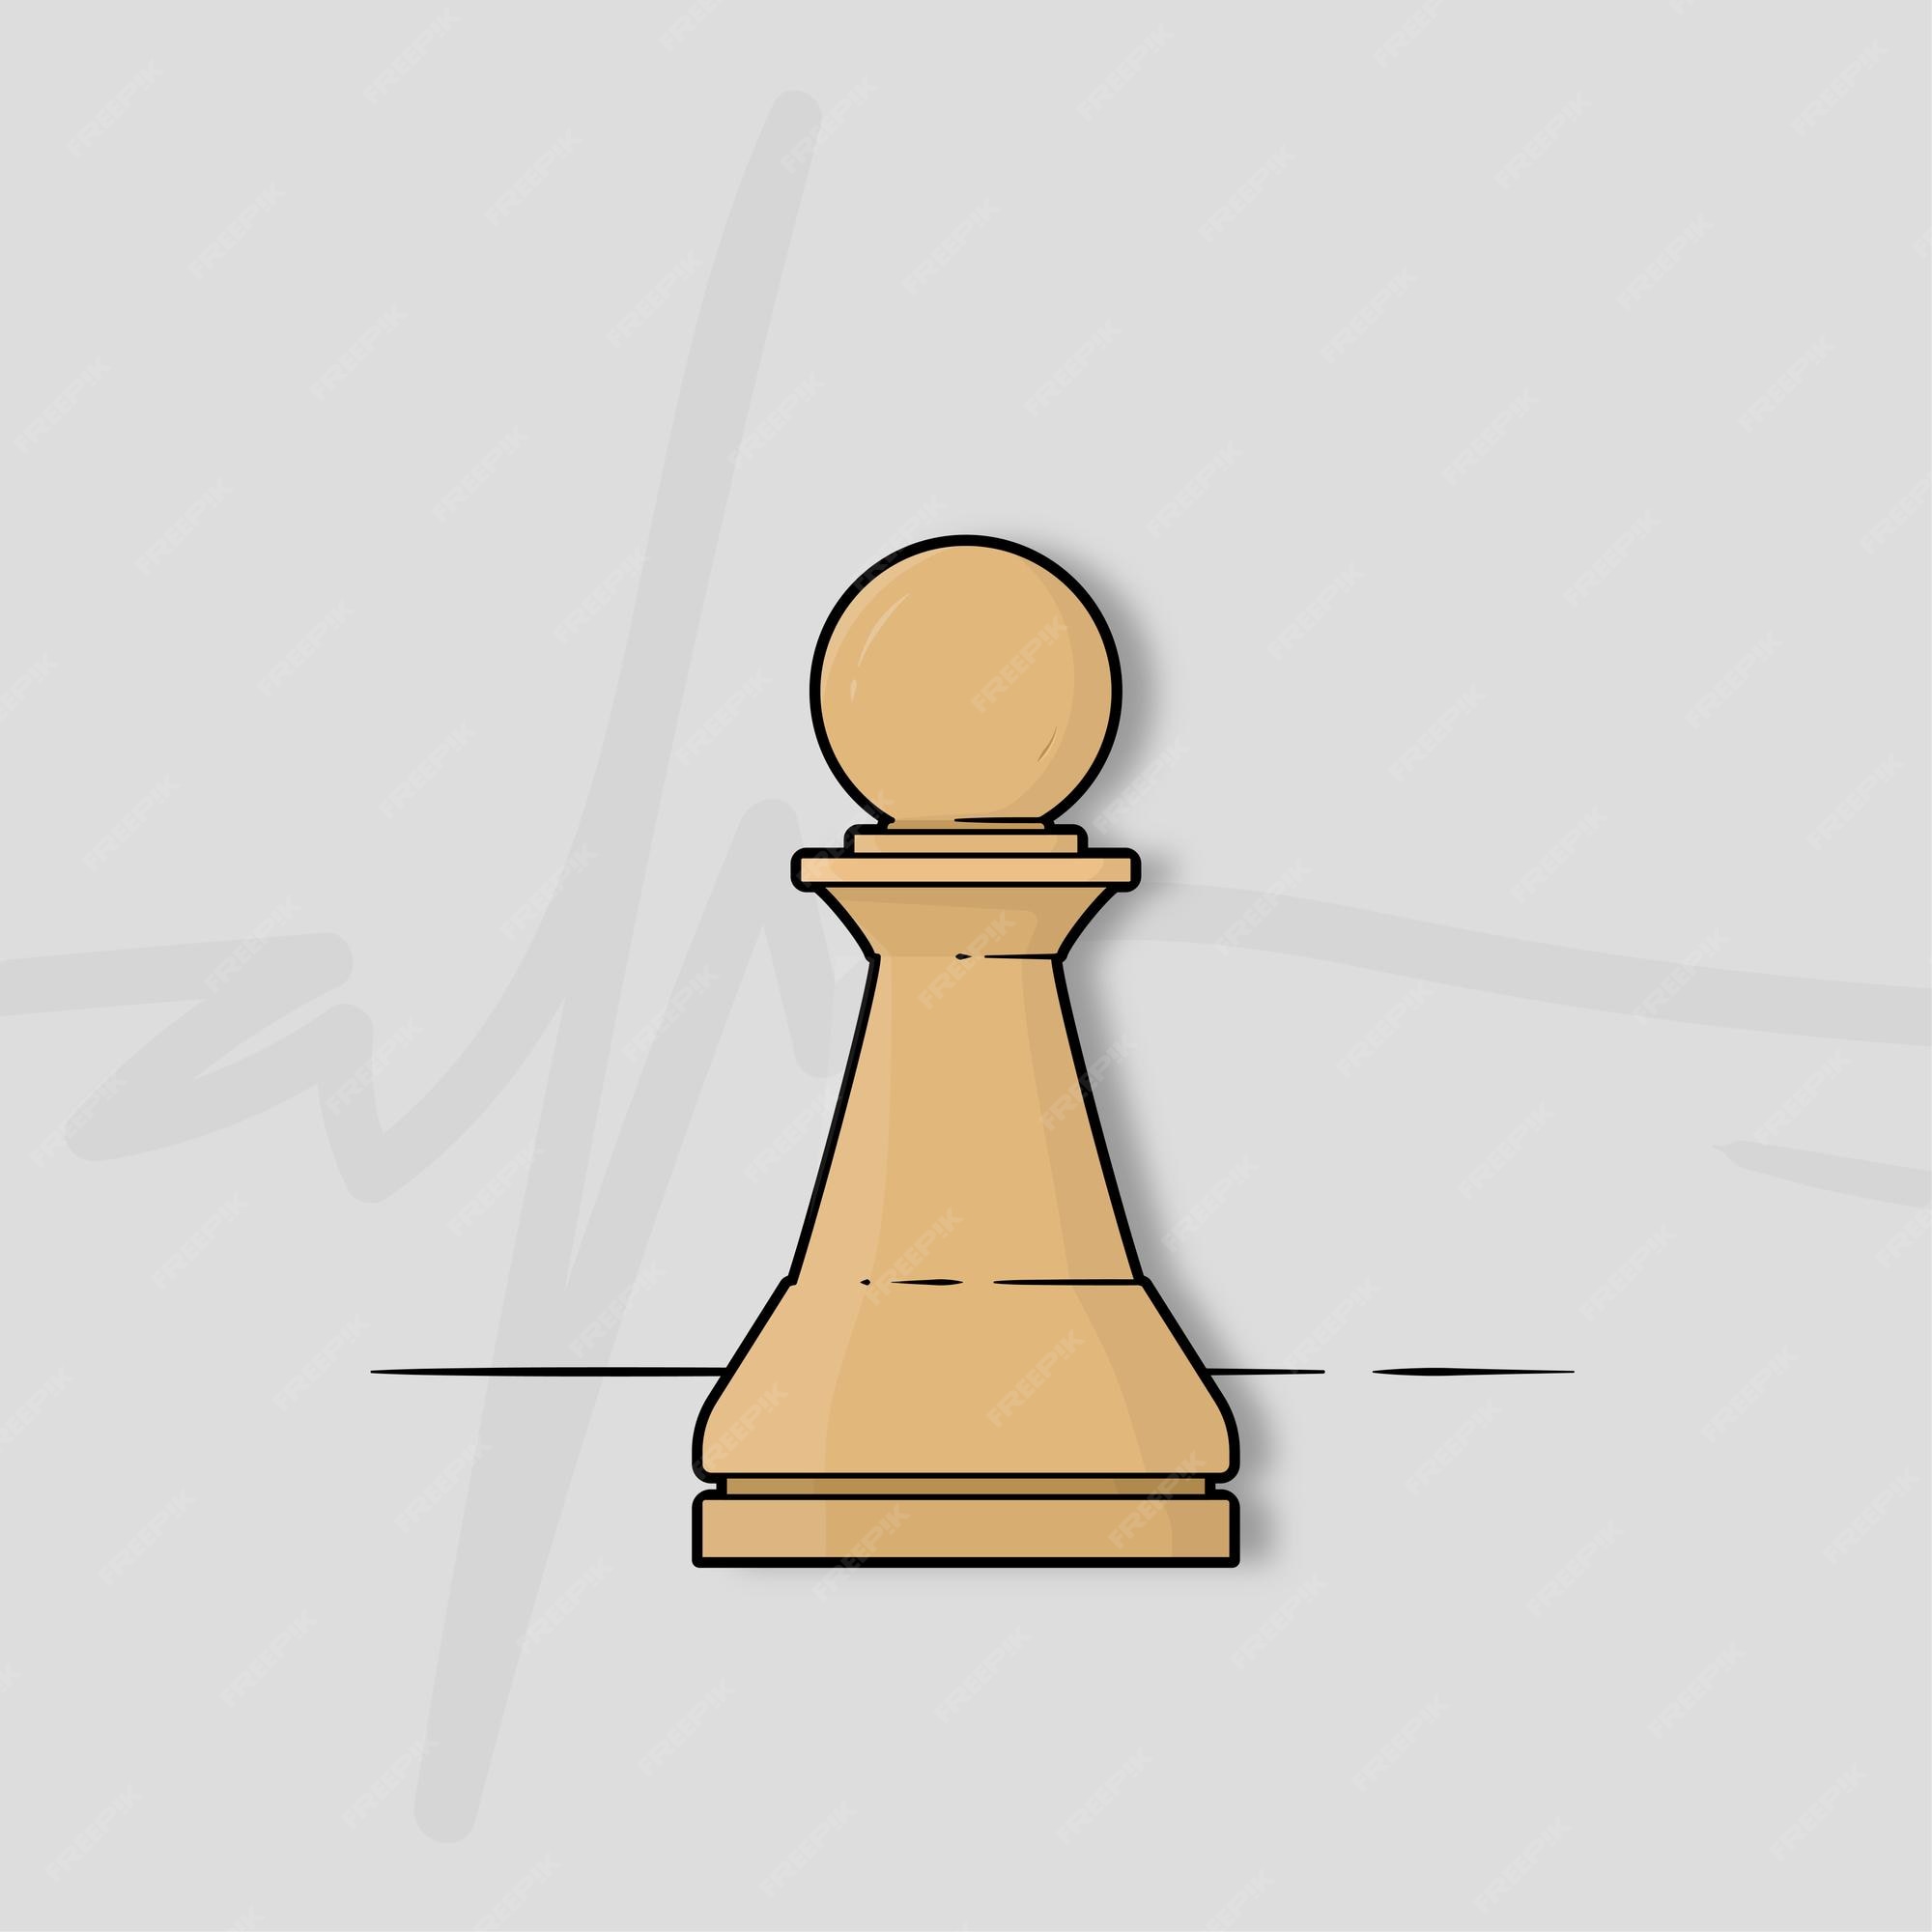 Peca peao xadrez  Compre Produtos Personalizados no Elo7